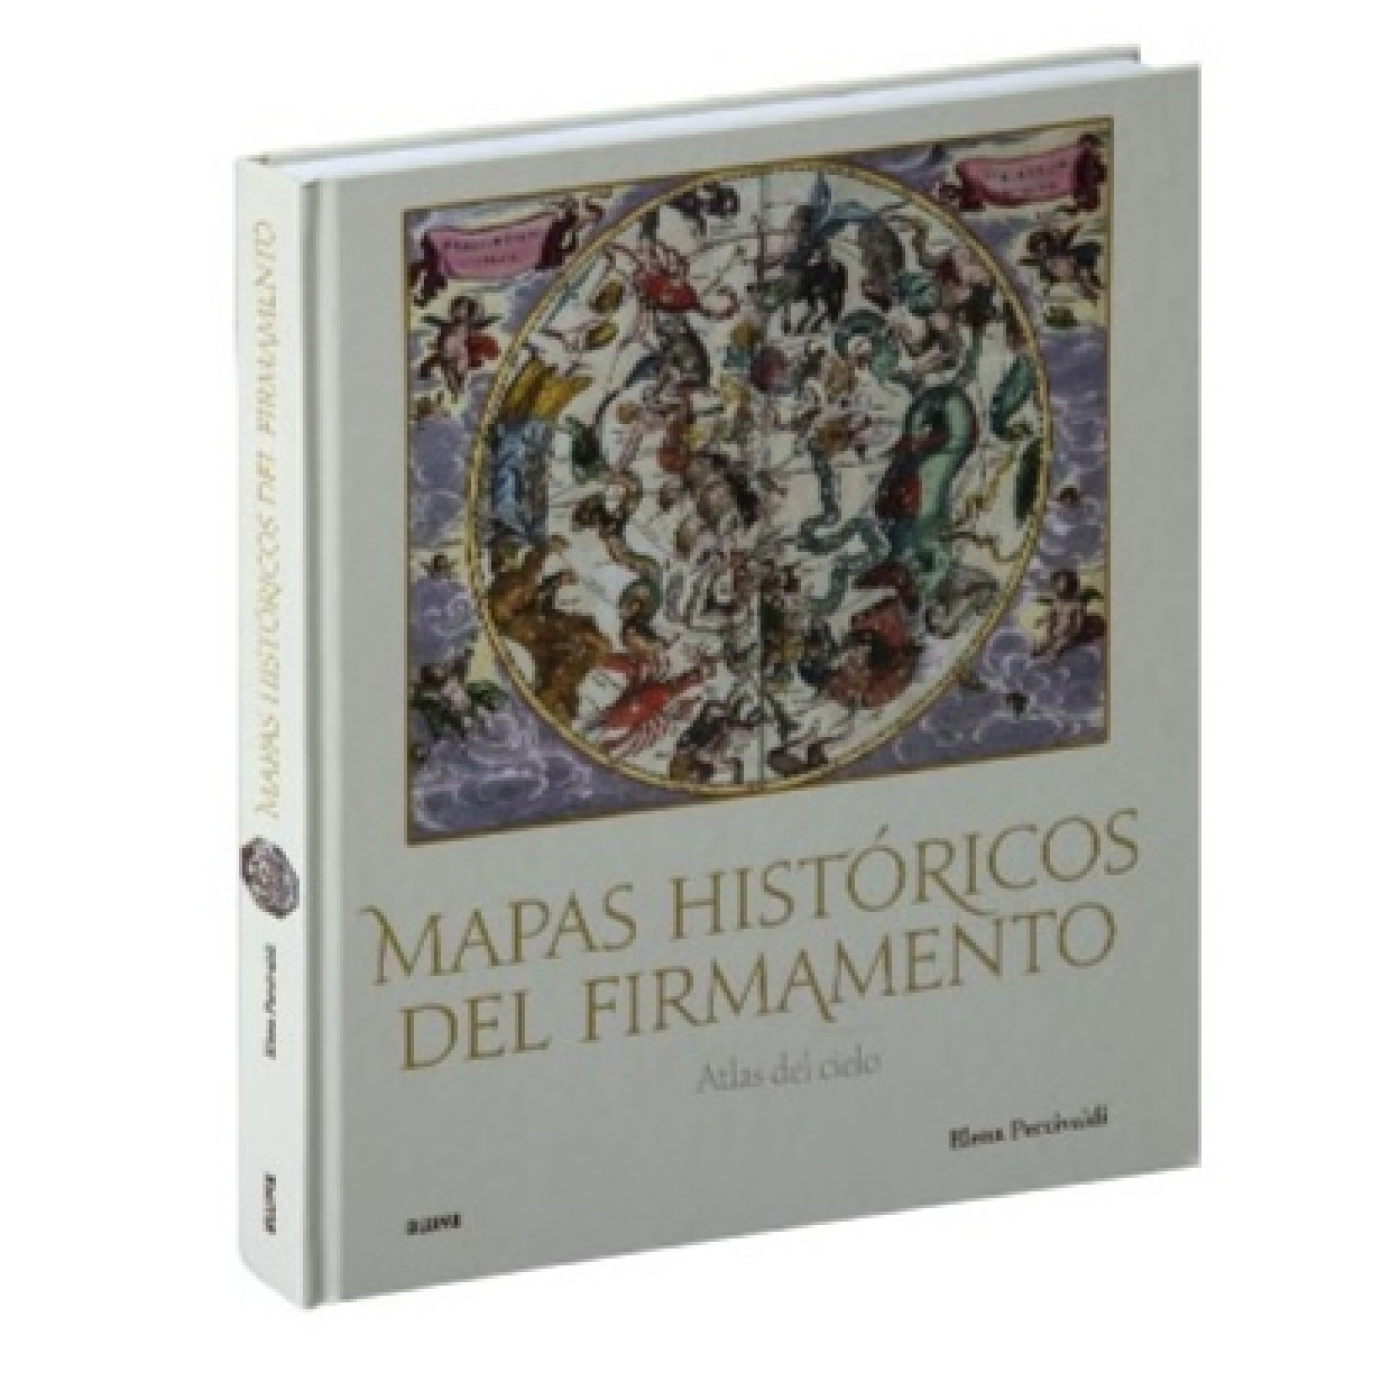 Libro “Mapas históricos del firmamento”